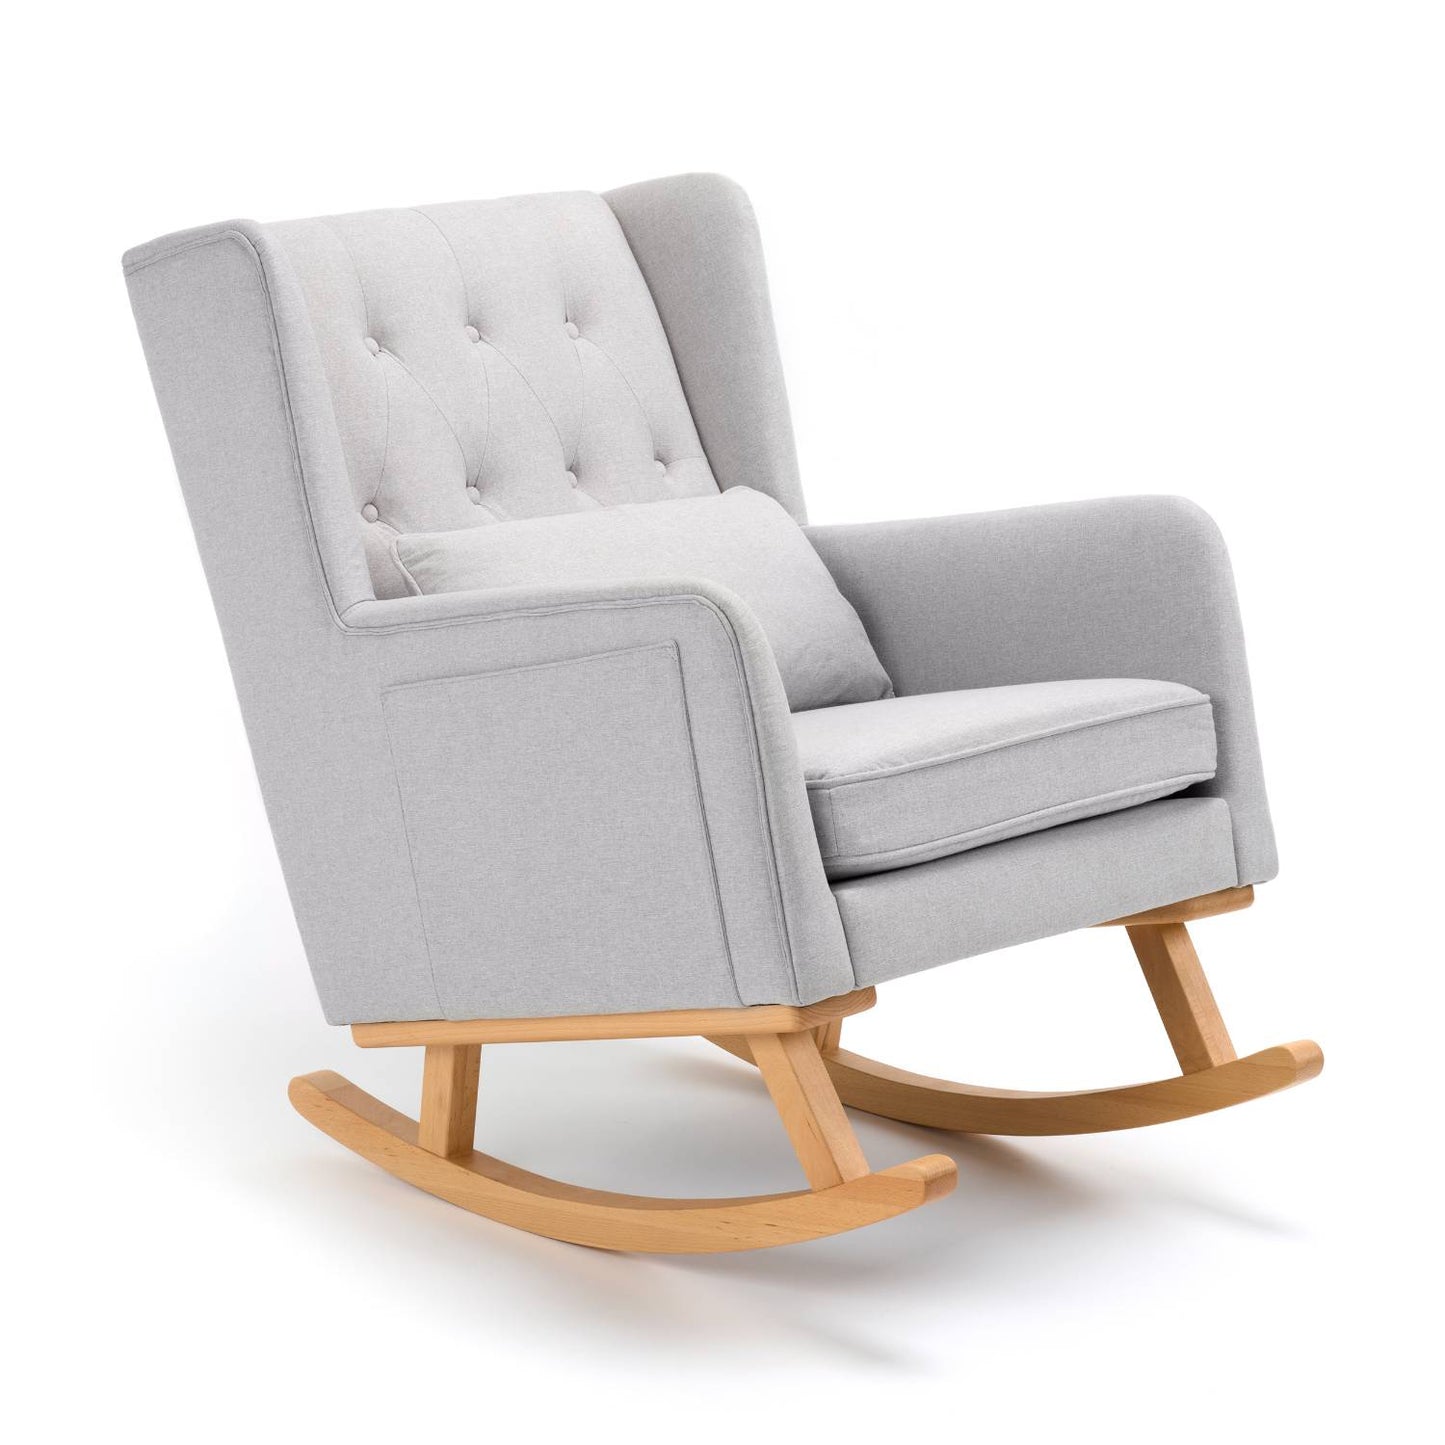 Babymore Lux Nursing Chair - Gentle Rocking & Convertible